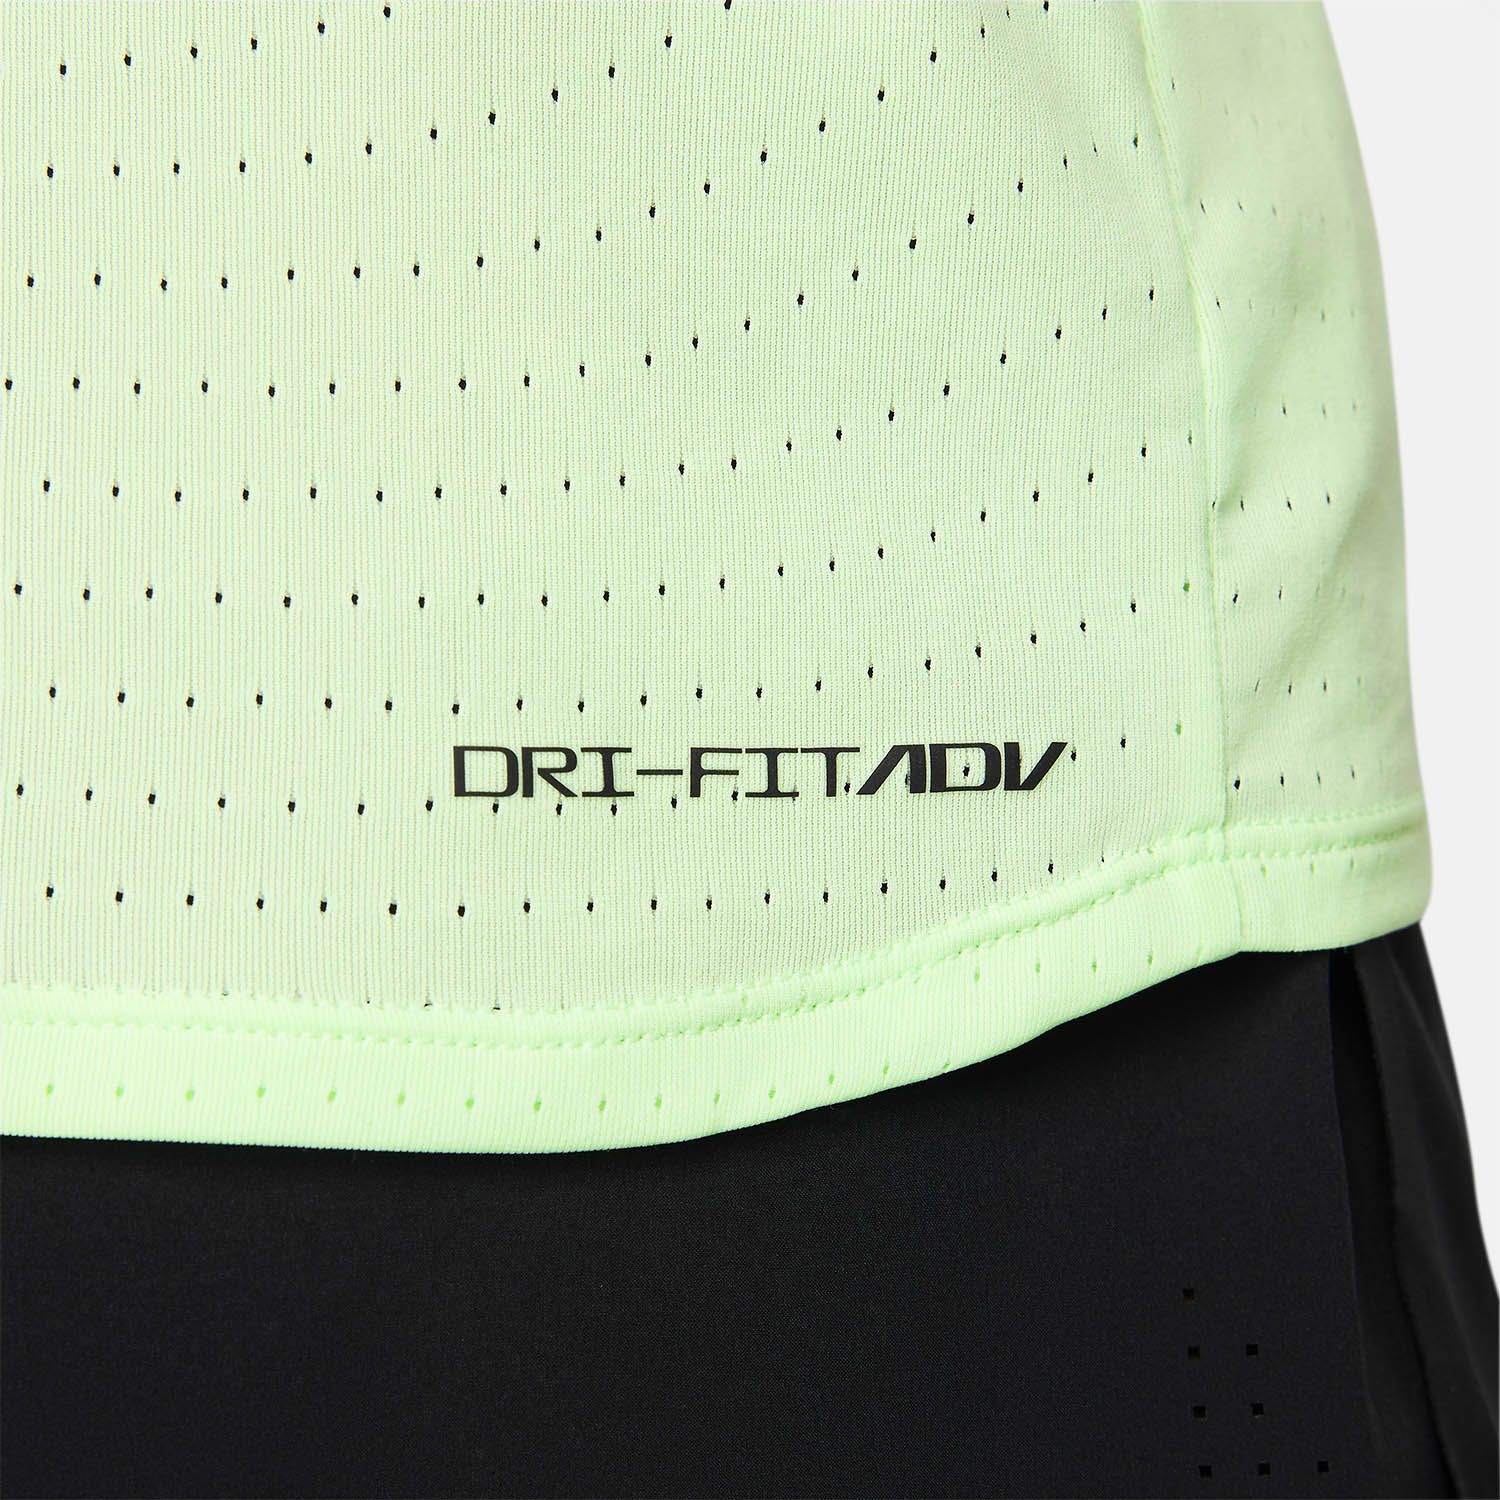 Nike Dri-FIT ADV AeroSwift Top - Vapor Green/Black